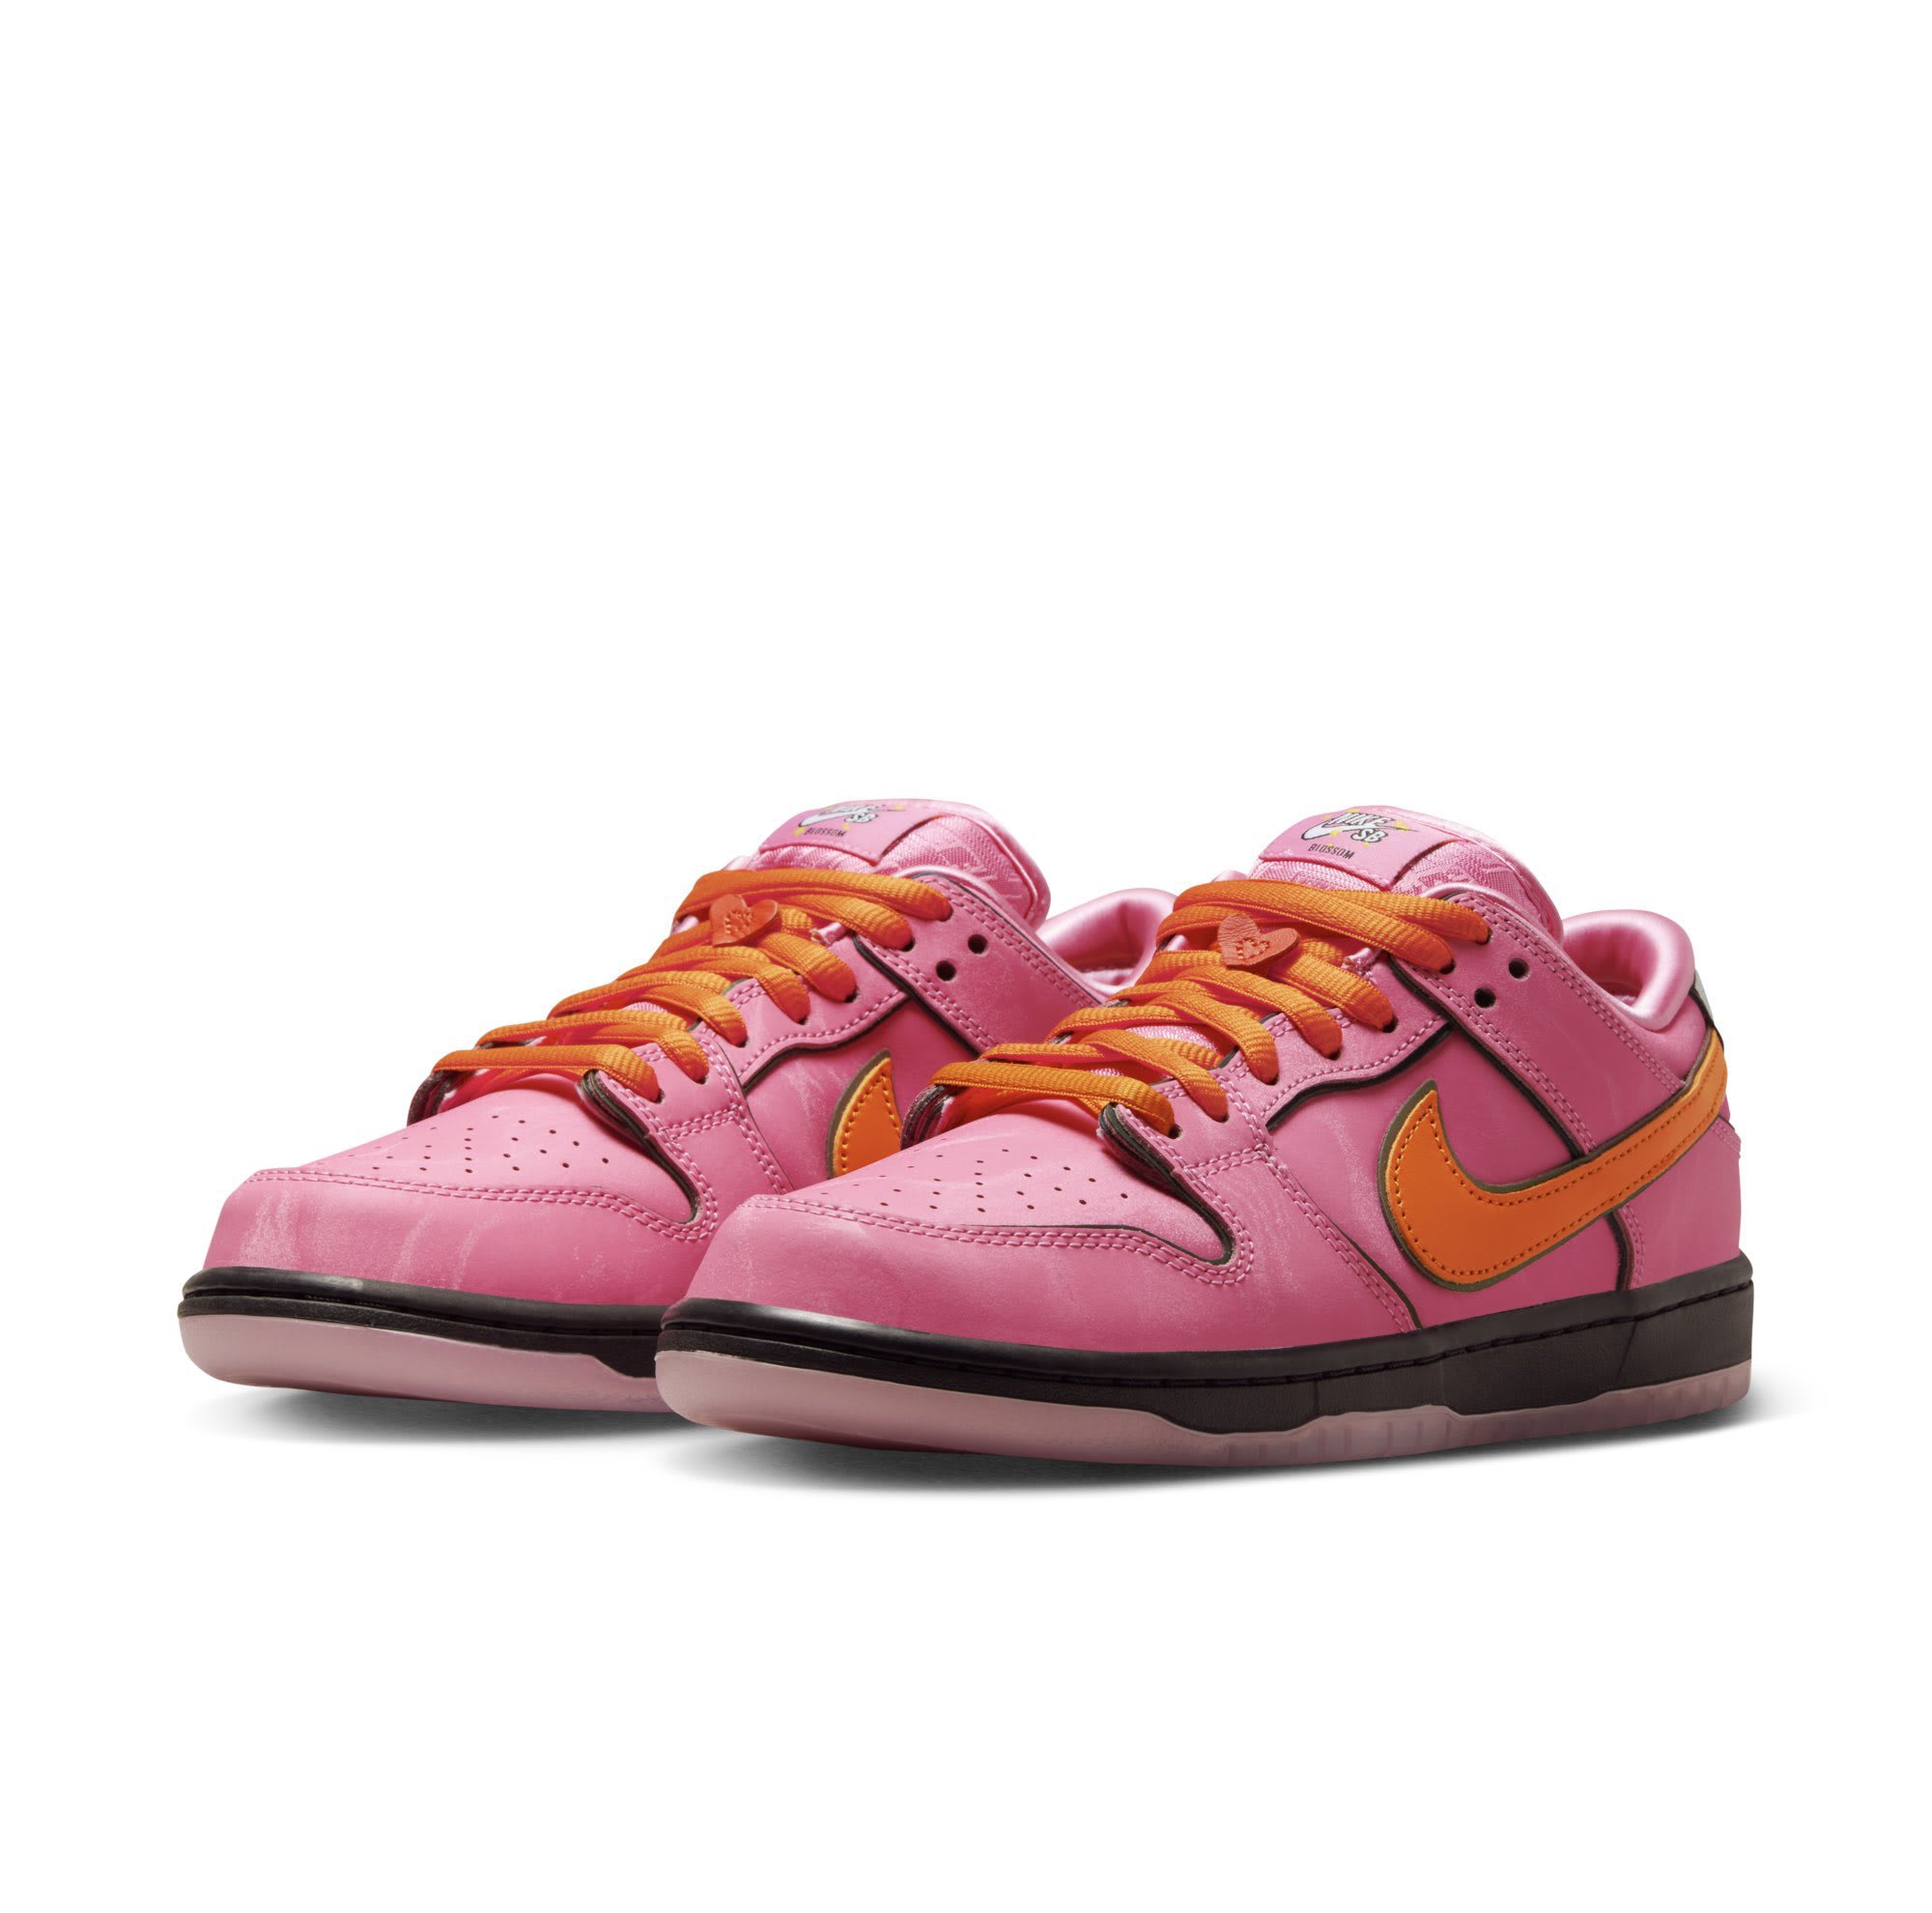 Powerpuff Girls x Nike SB Dunk Low “Blossom” - Nike - Throw